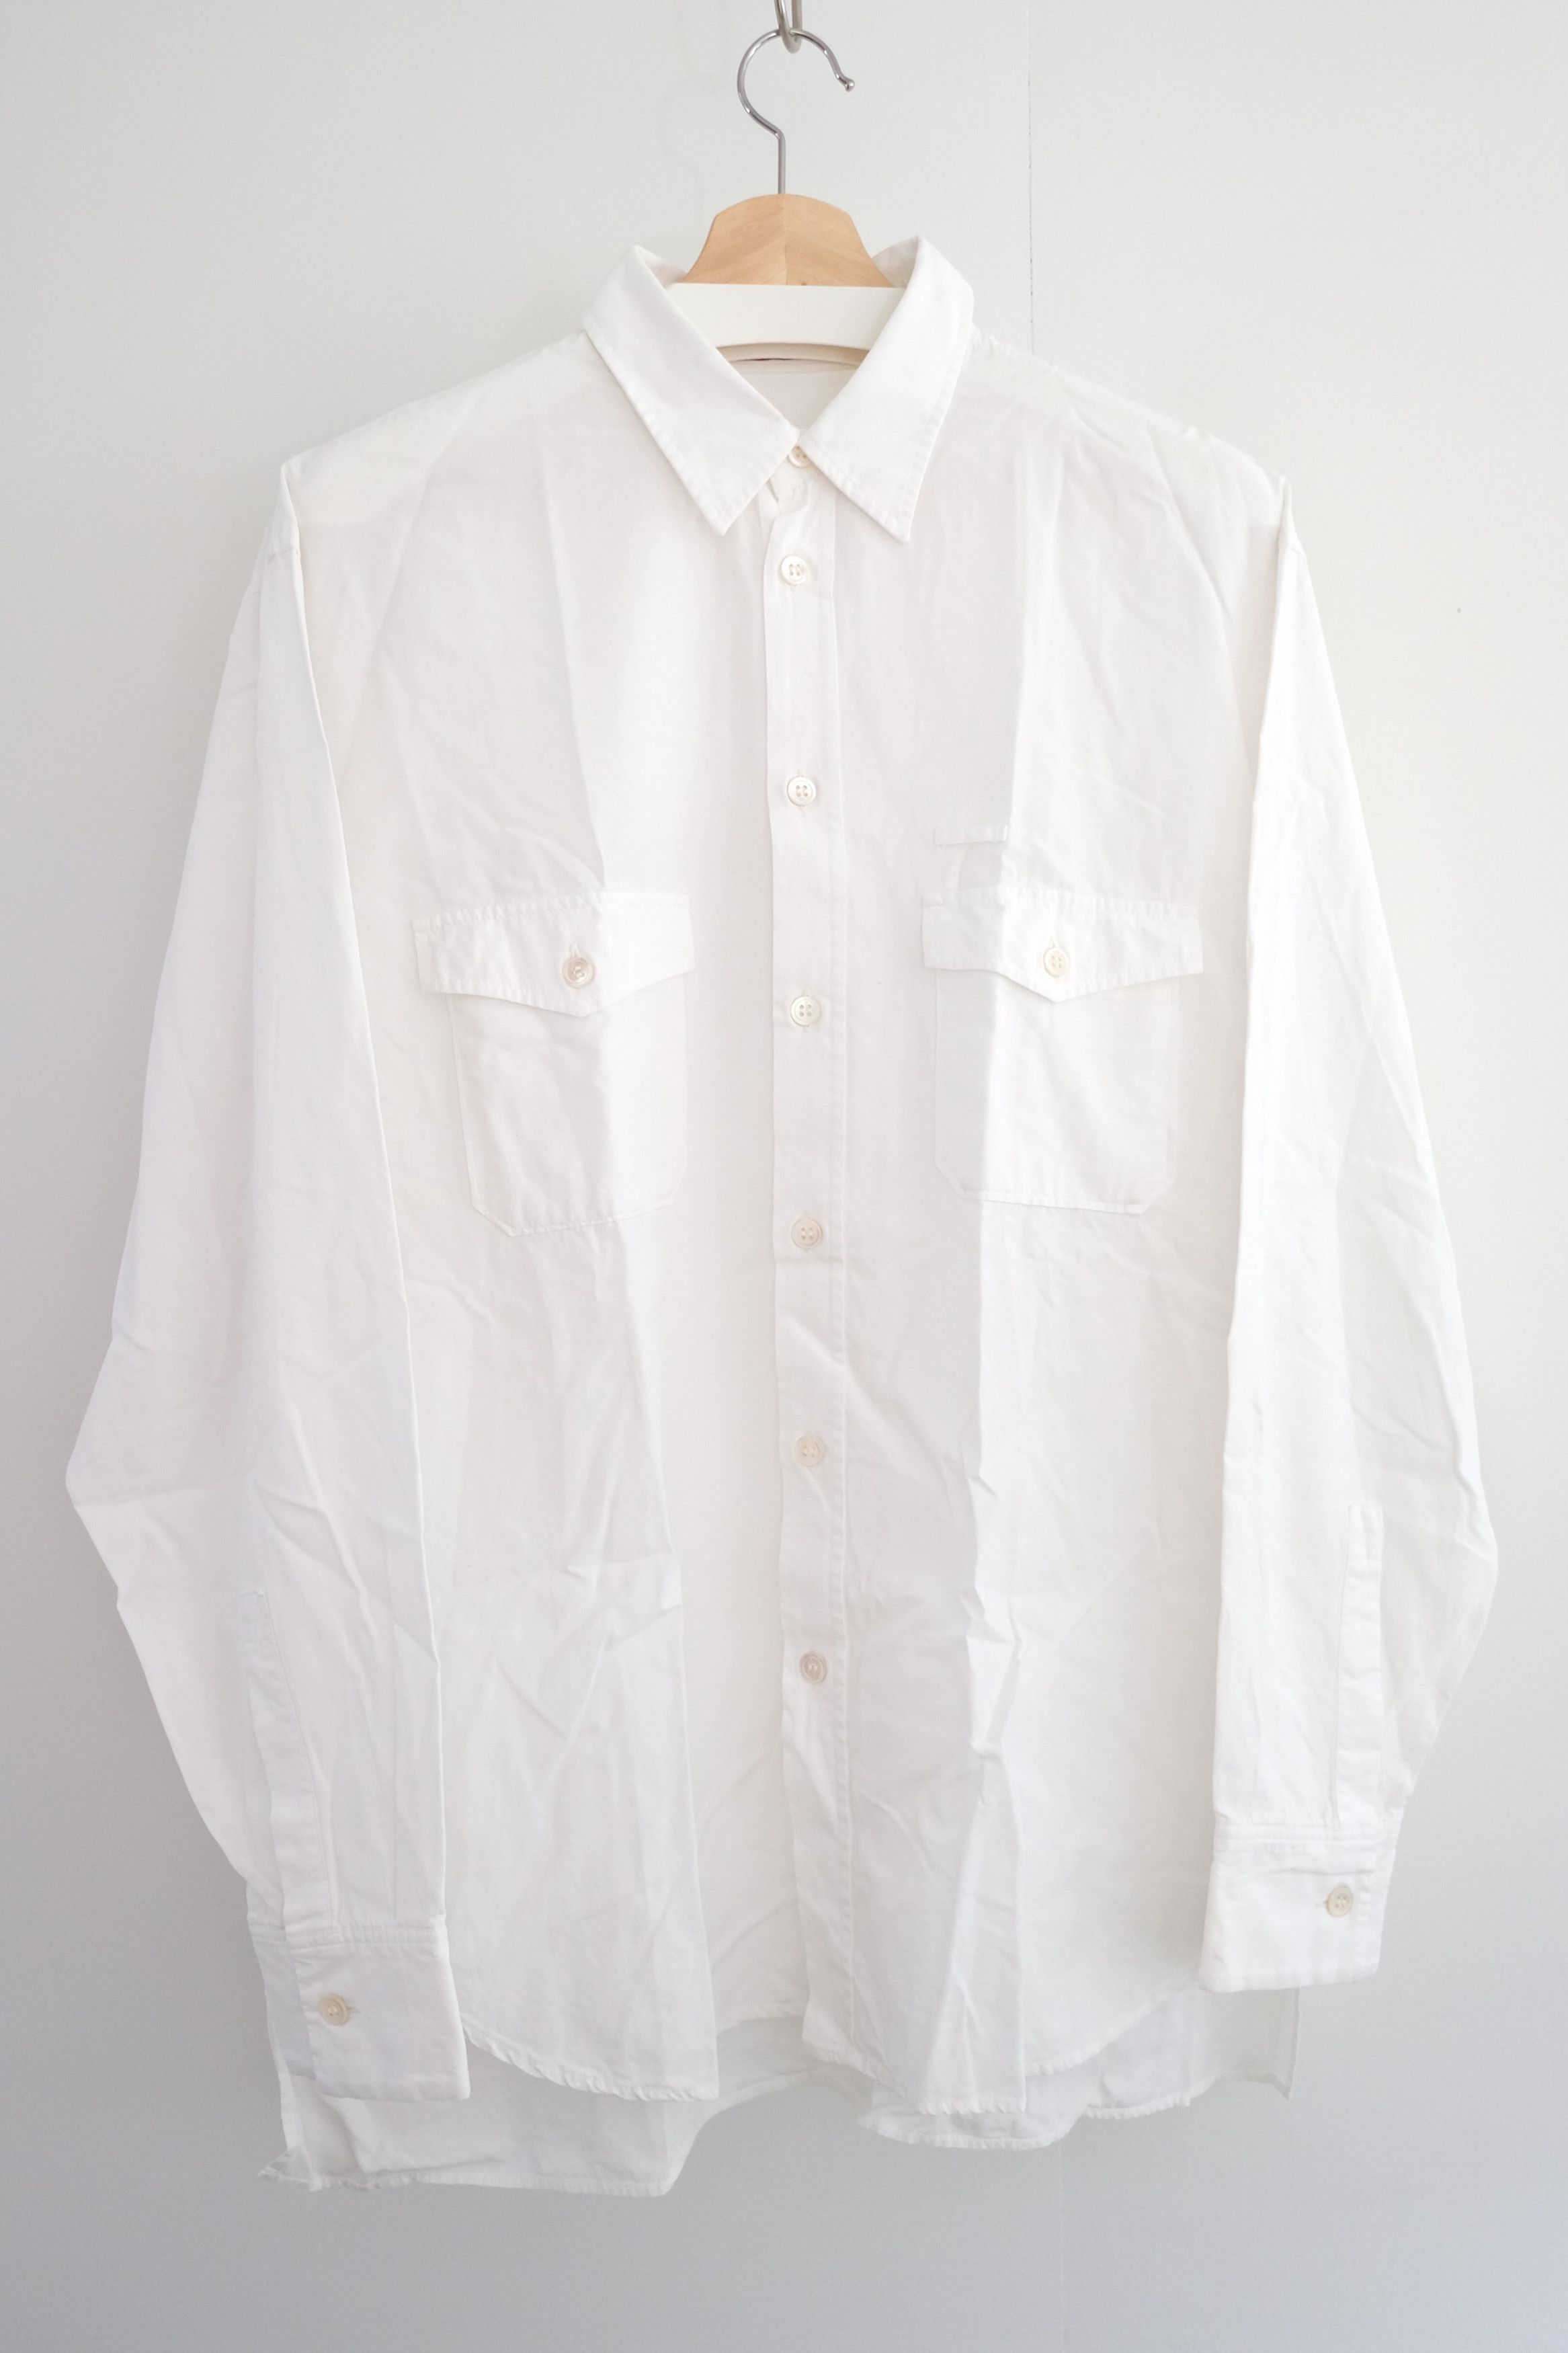 🎐 YFM [2000s] Utility Shirt with Drop Hem, White - 1